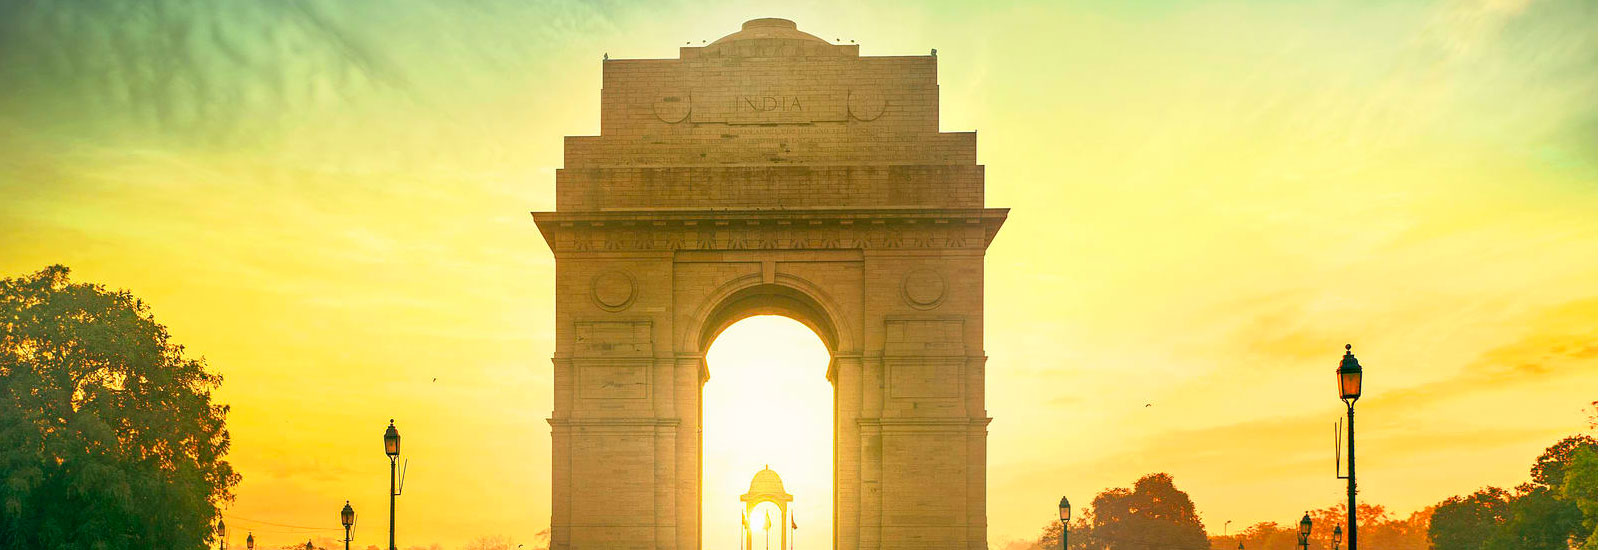 India Gate (Delhi, India)